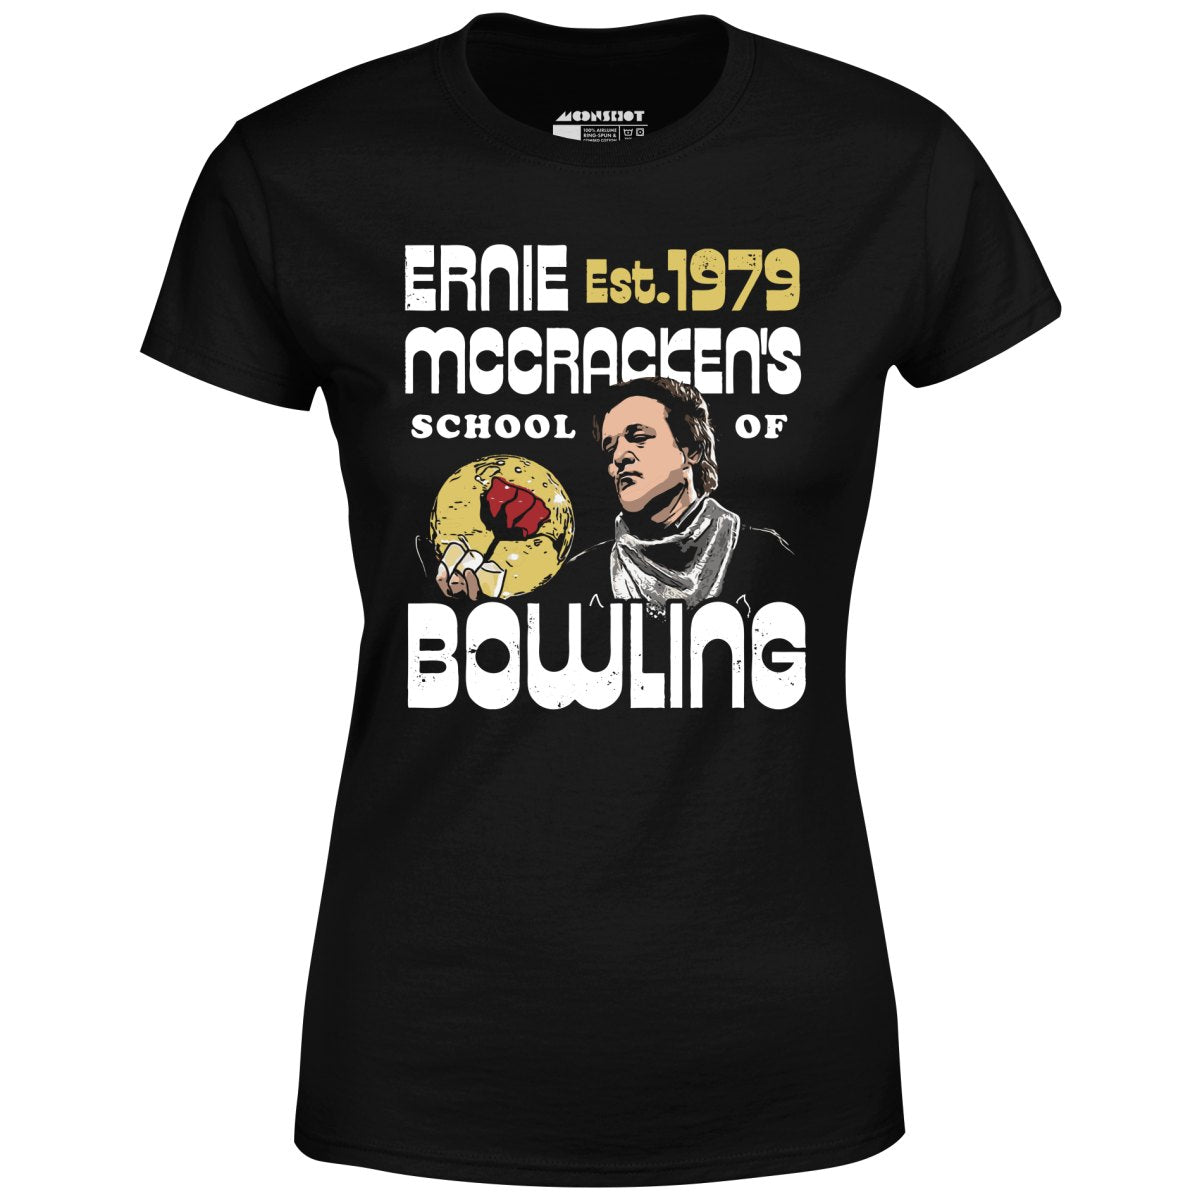 Ernie McCracken's School of Bowling - Women's T-Shirt